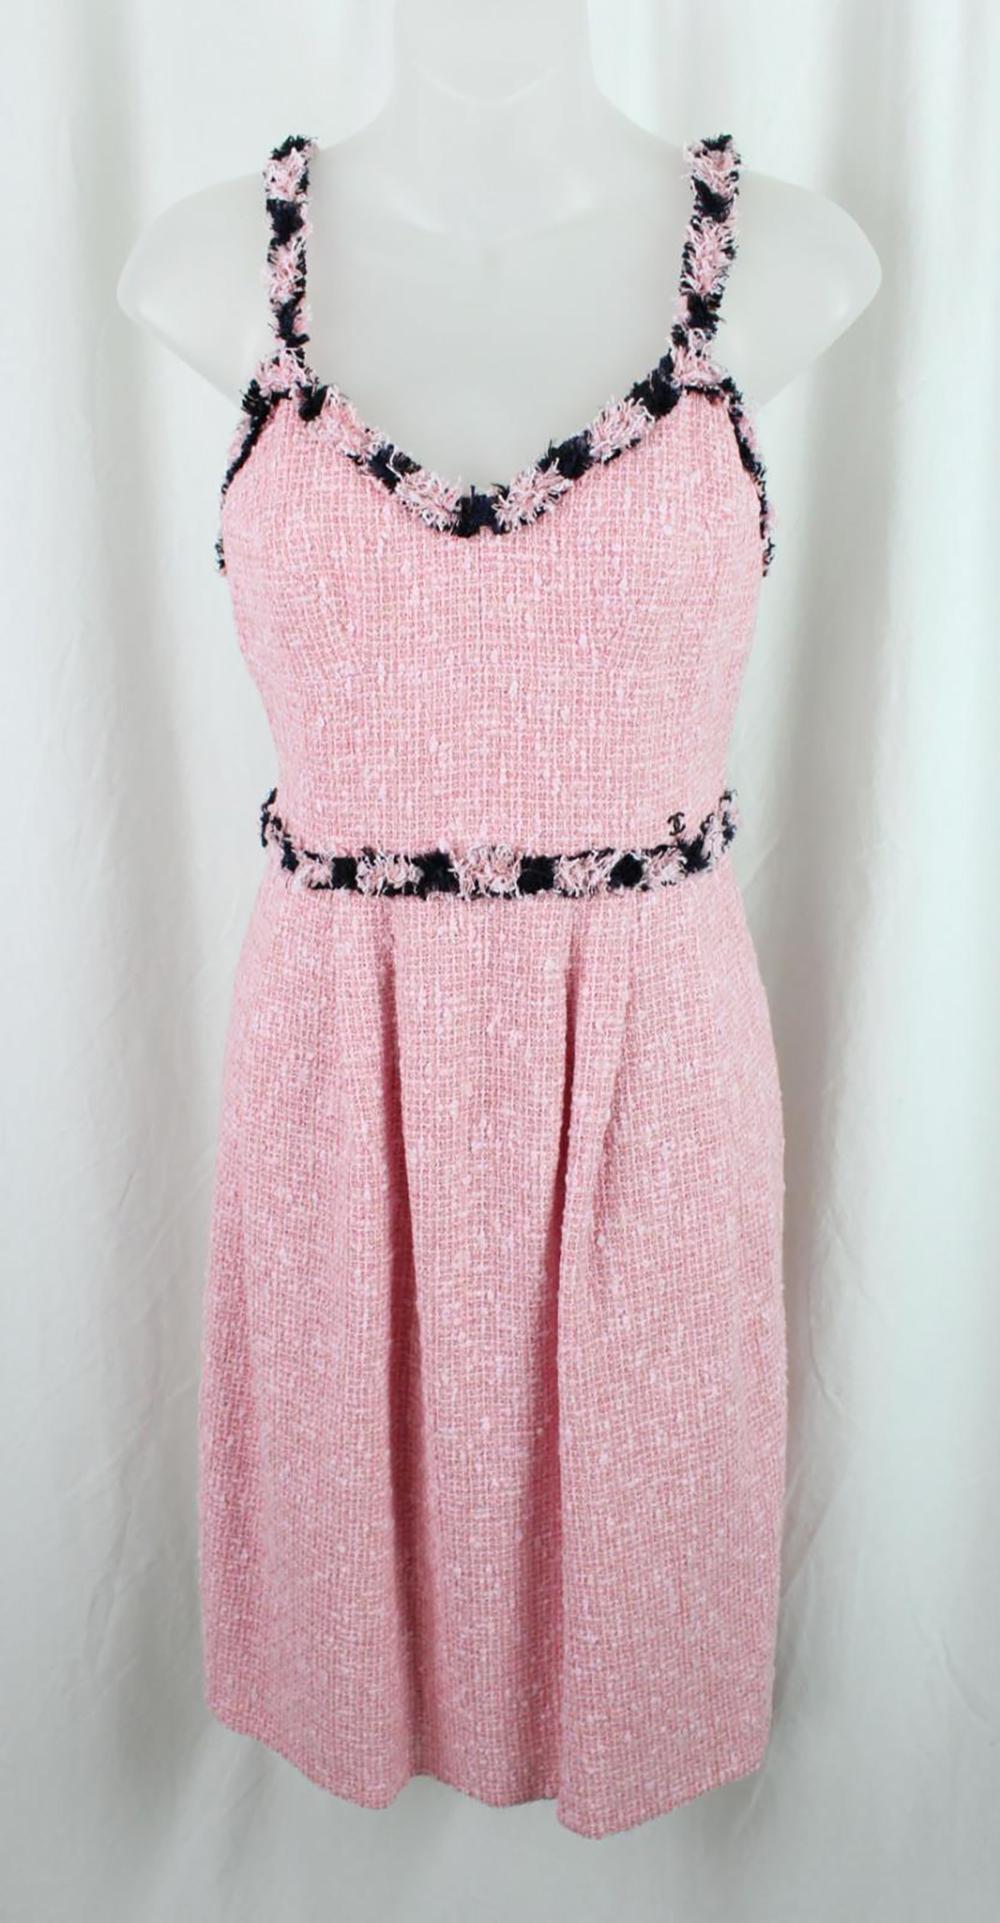 Chanel Eva Longoria Style Famous Pastel Pink Tweed Dress For Sale 5